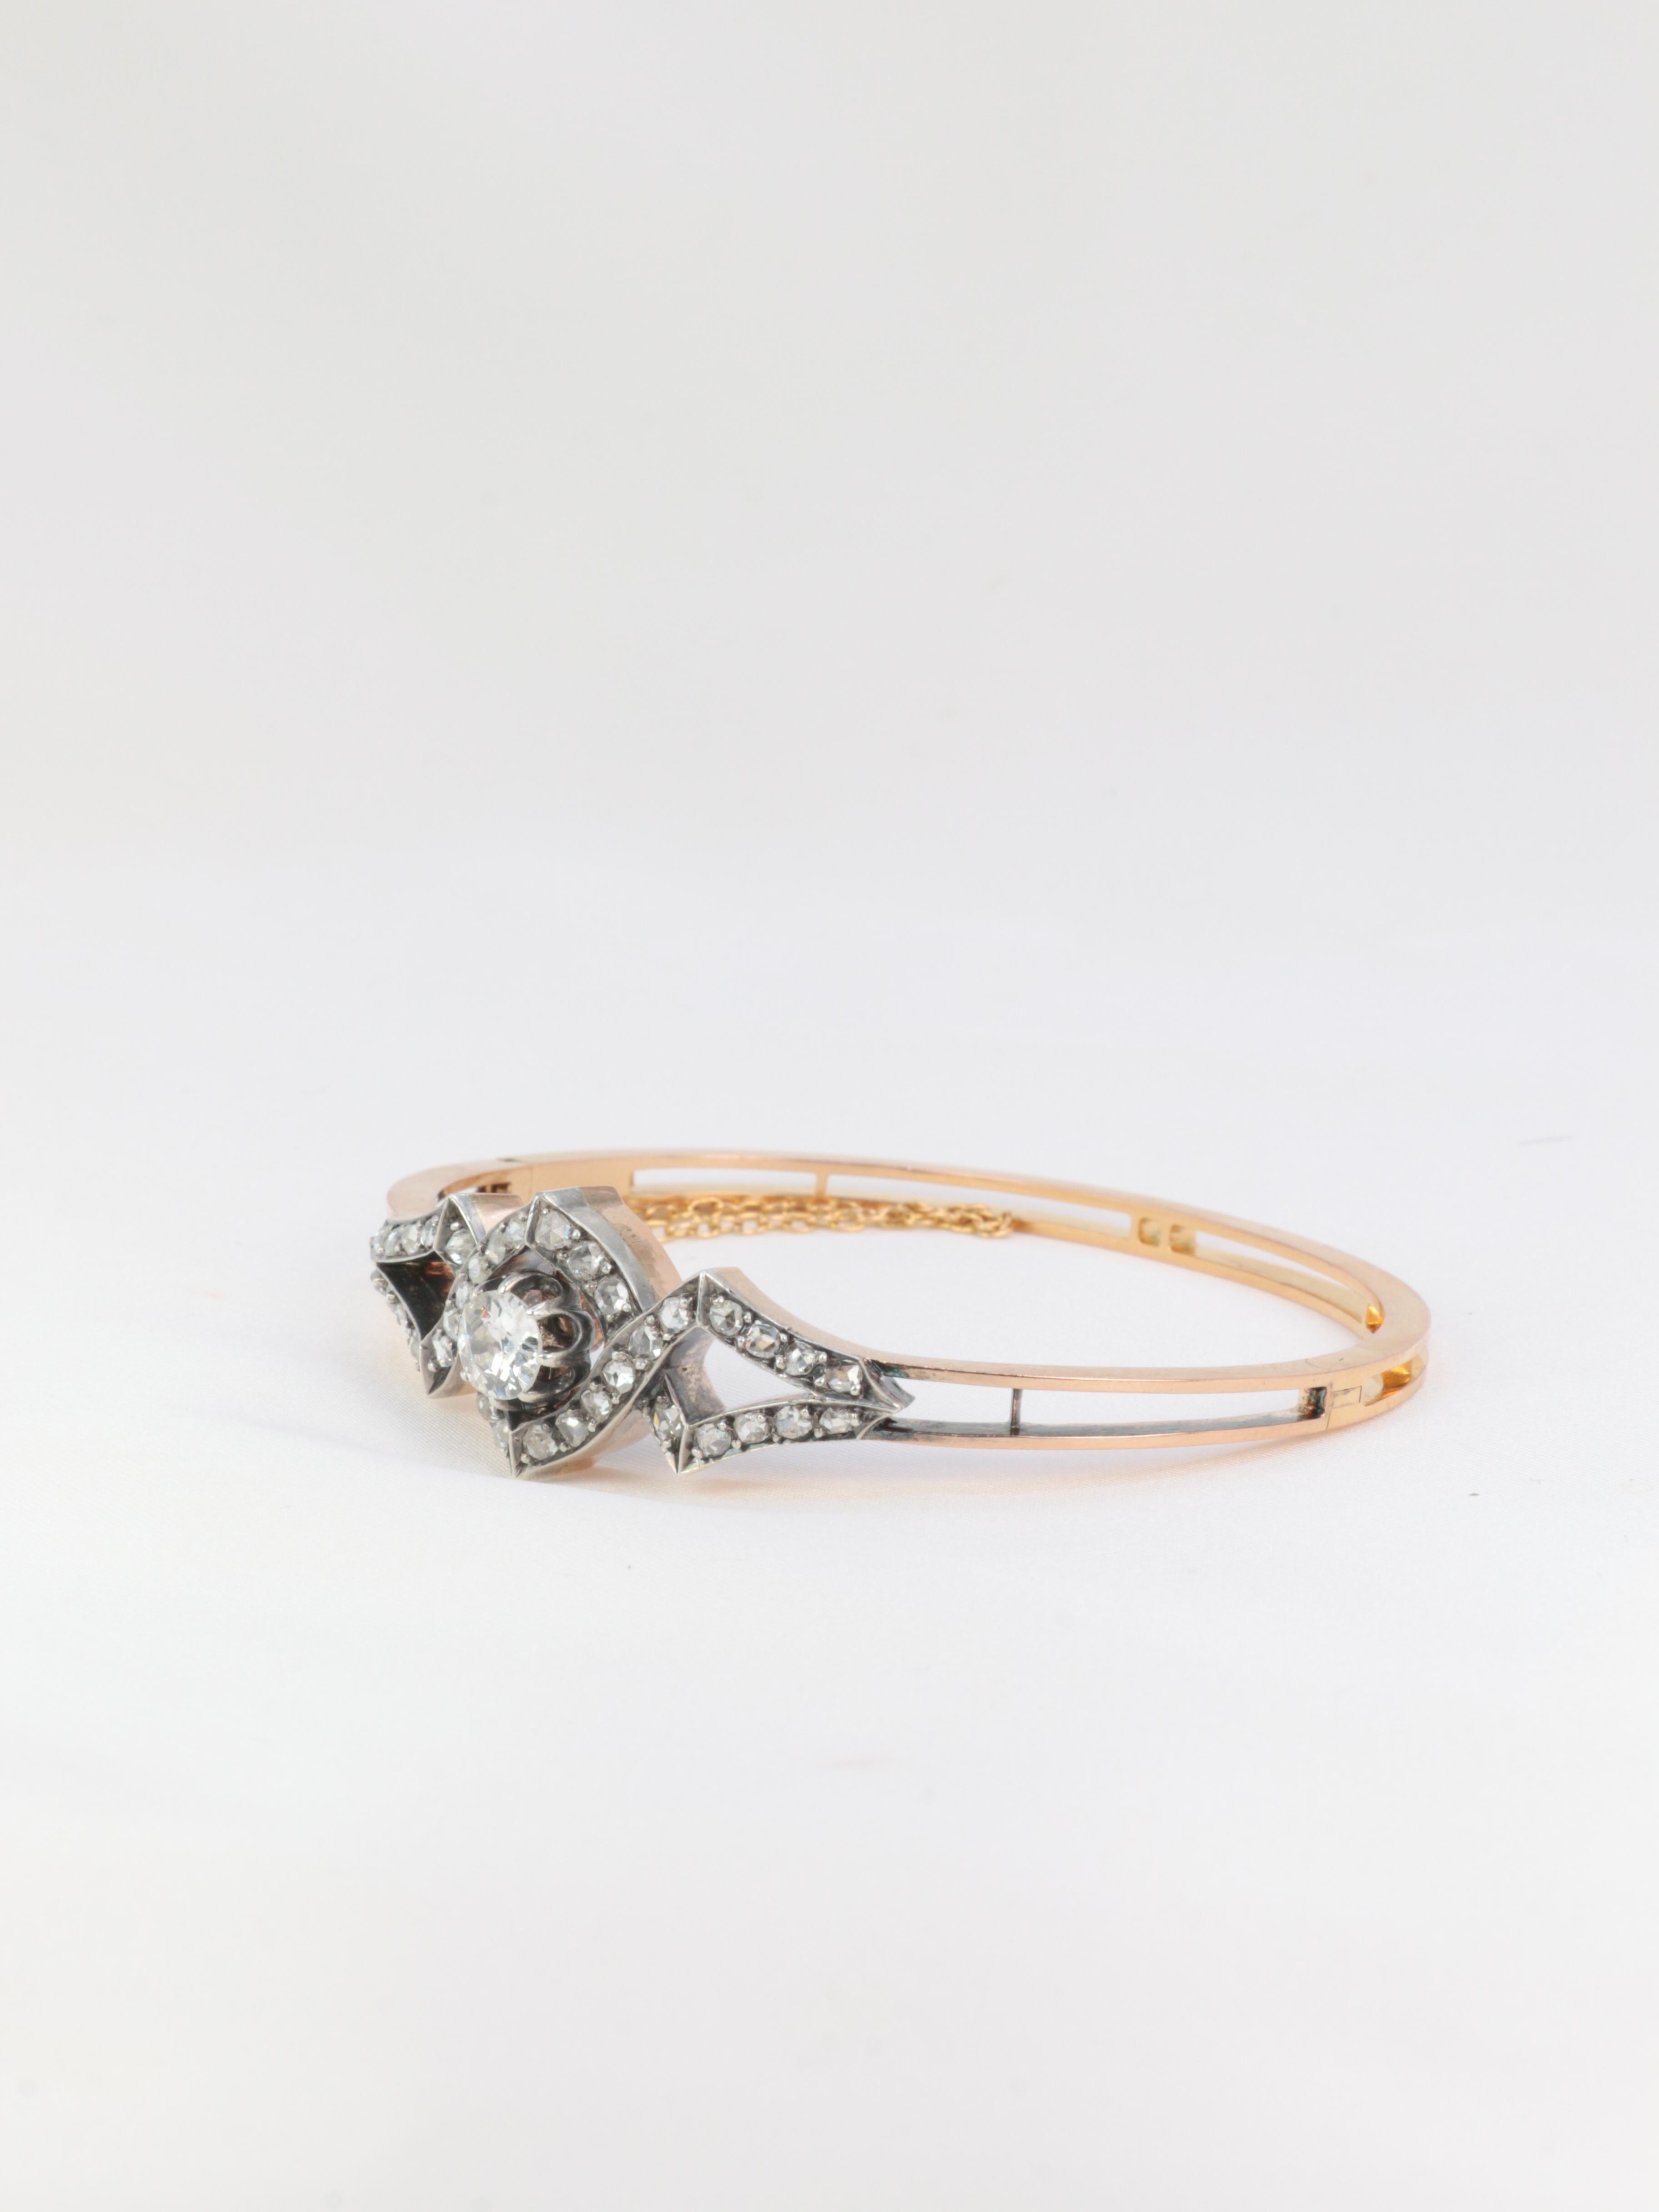 Rose Gold Antique Bangle Bracelet Set with Old Mine Cut Diamonds, Late 19th C. For Sale 7